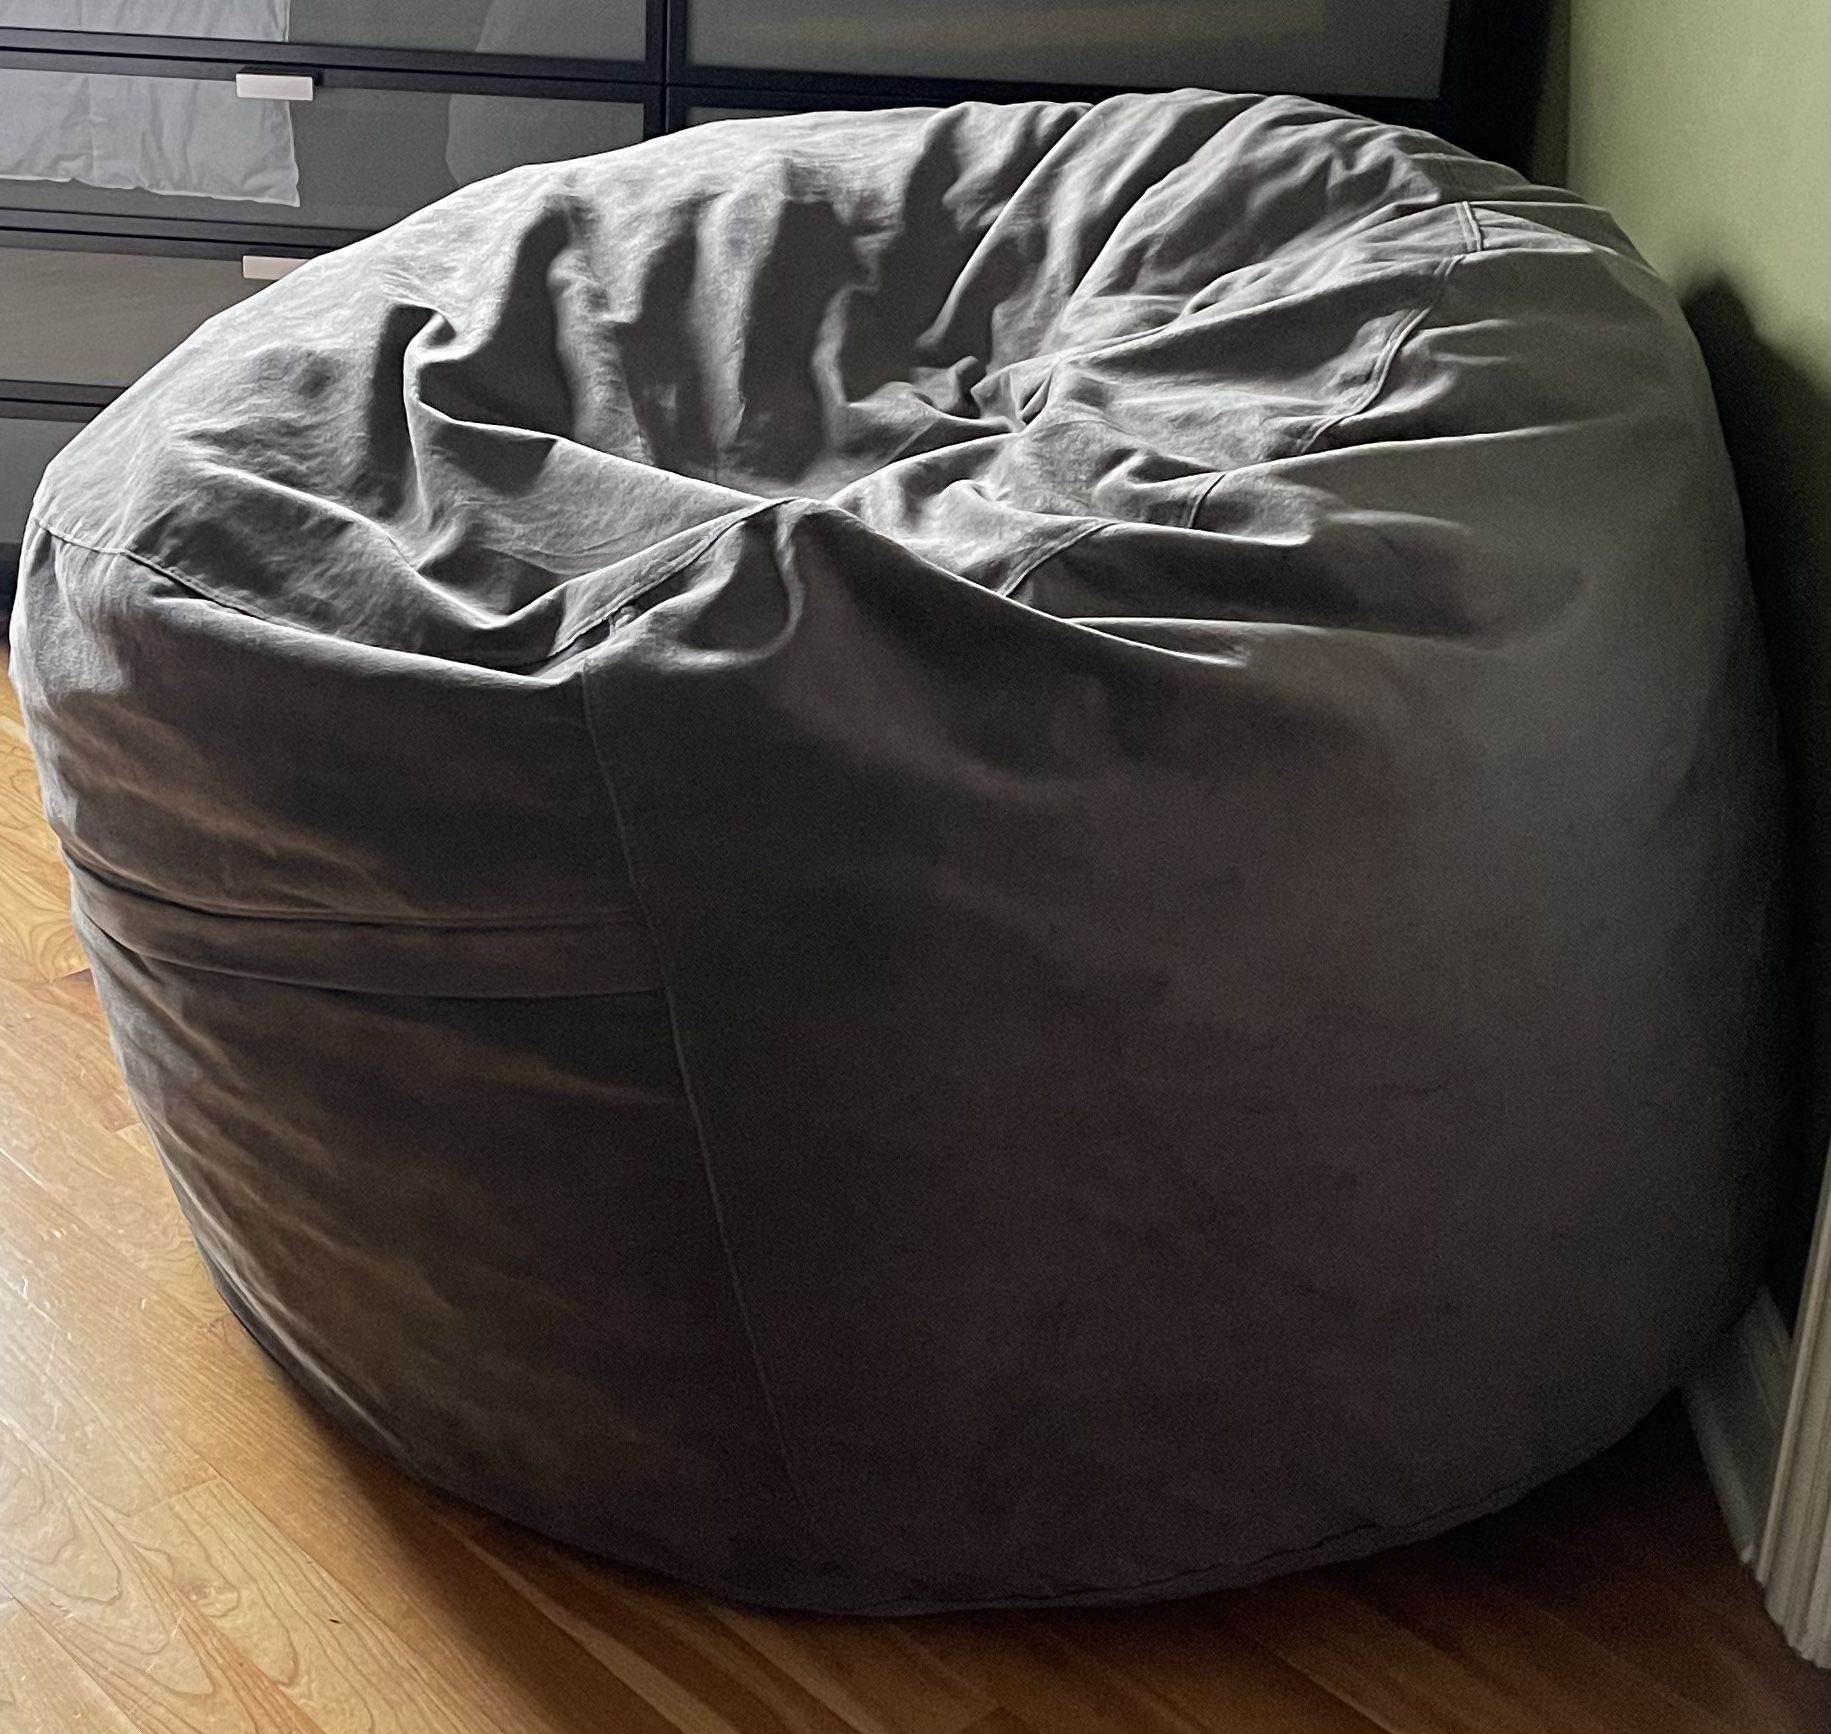 Bean Bag Chair: Giant 6' Memory Foam Furniture Bean Bag - Big Sofa with Soft Micro Fiber Cover, Gray